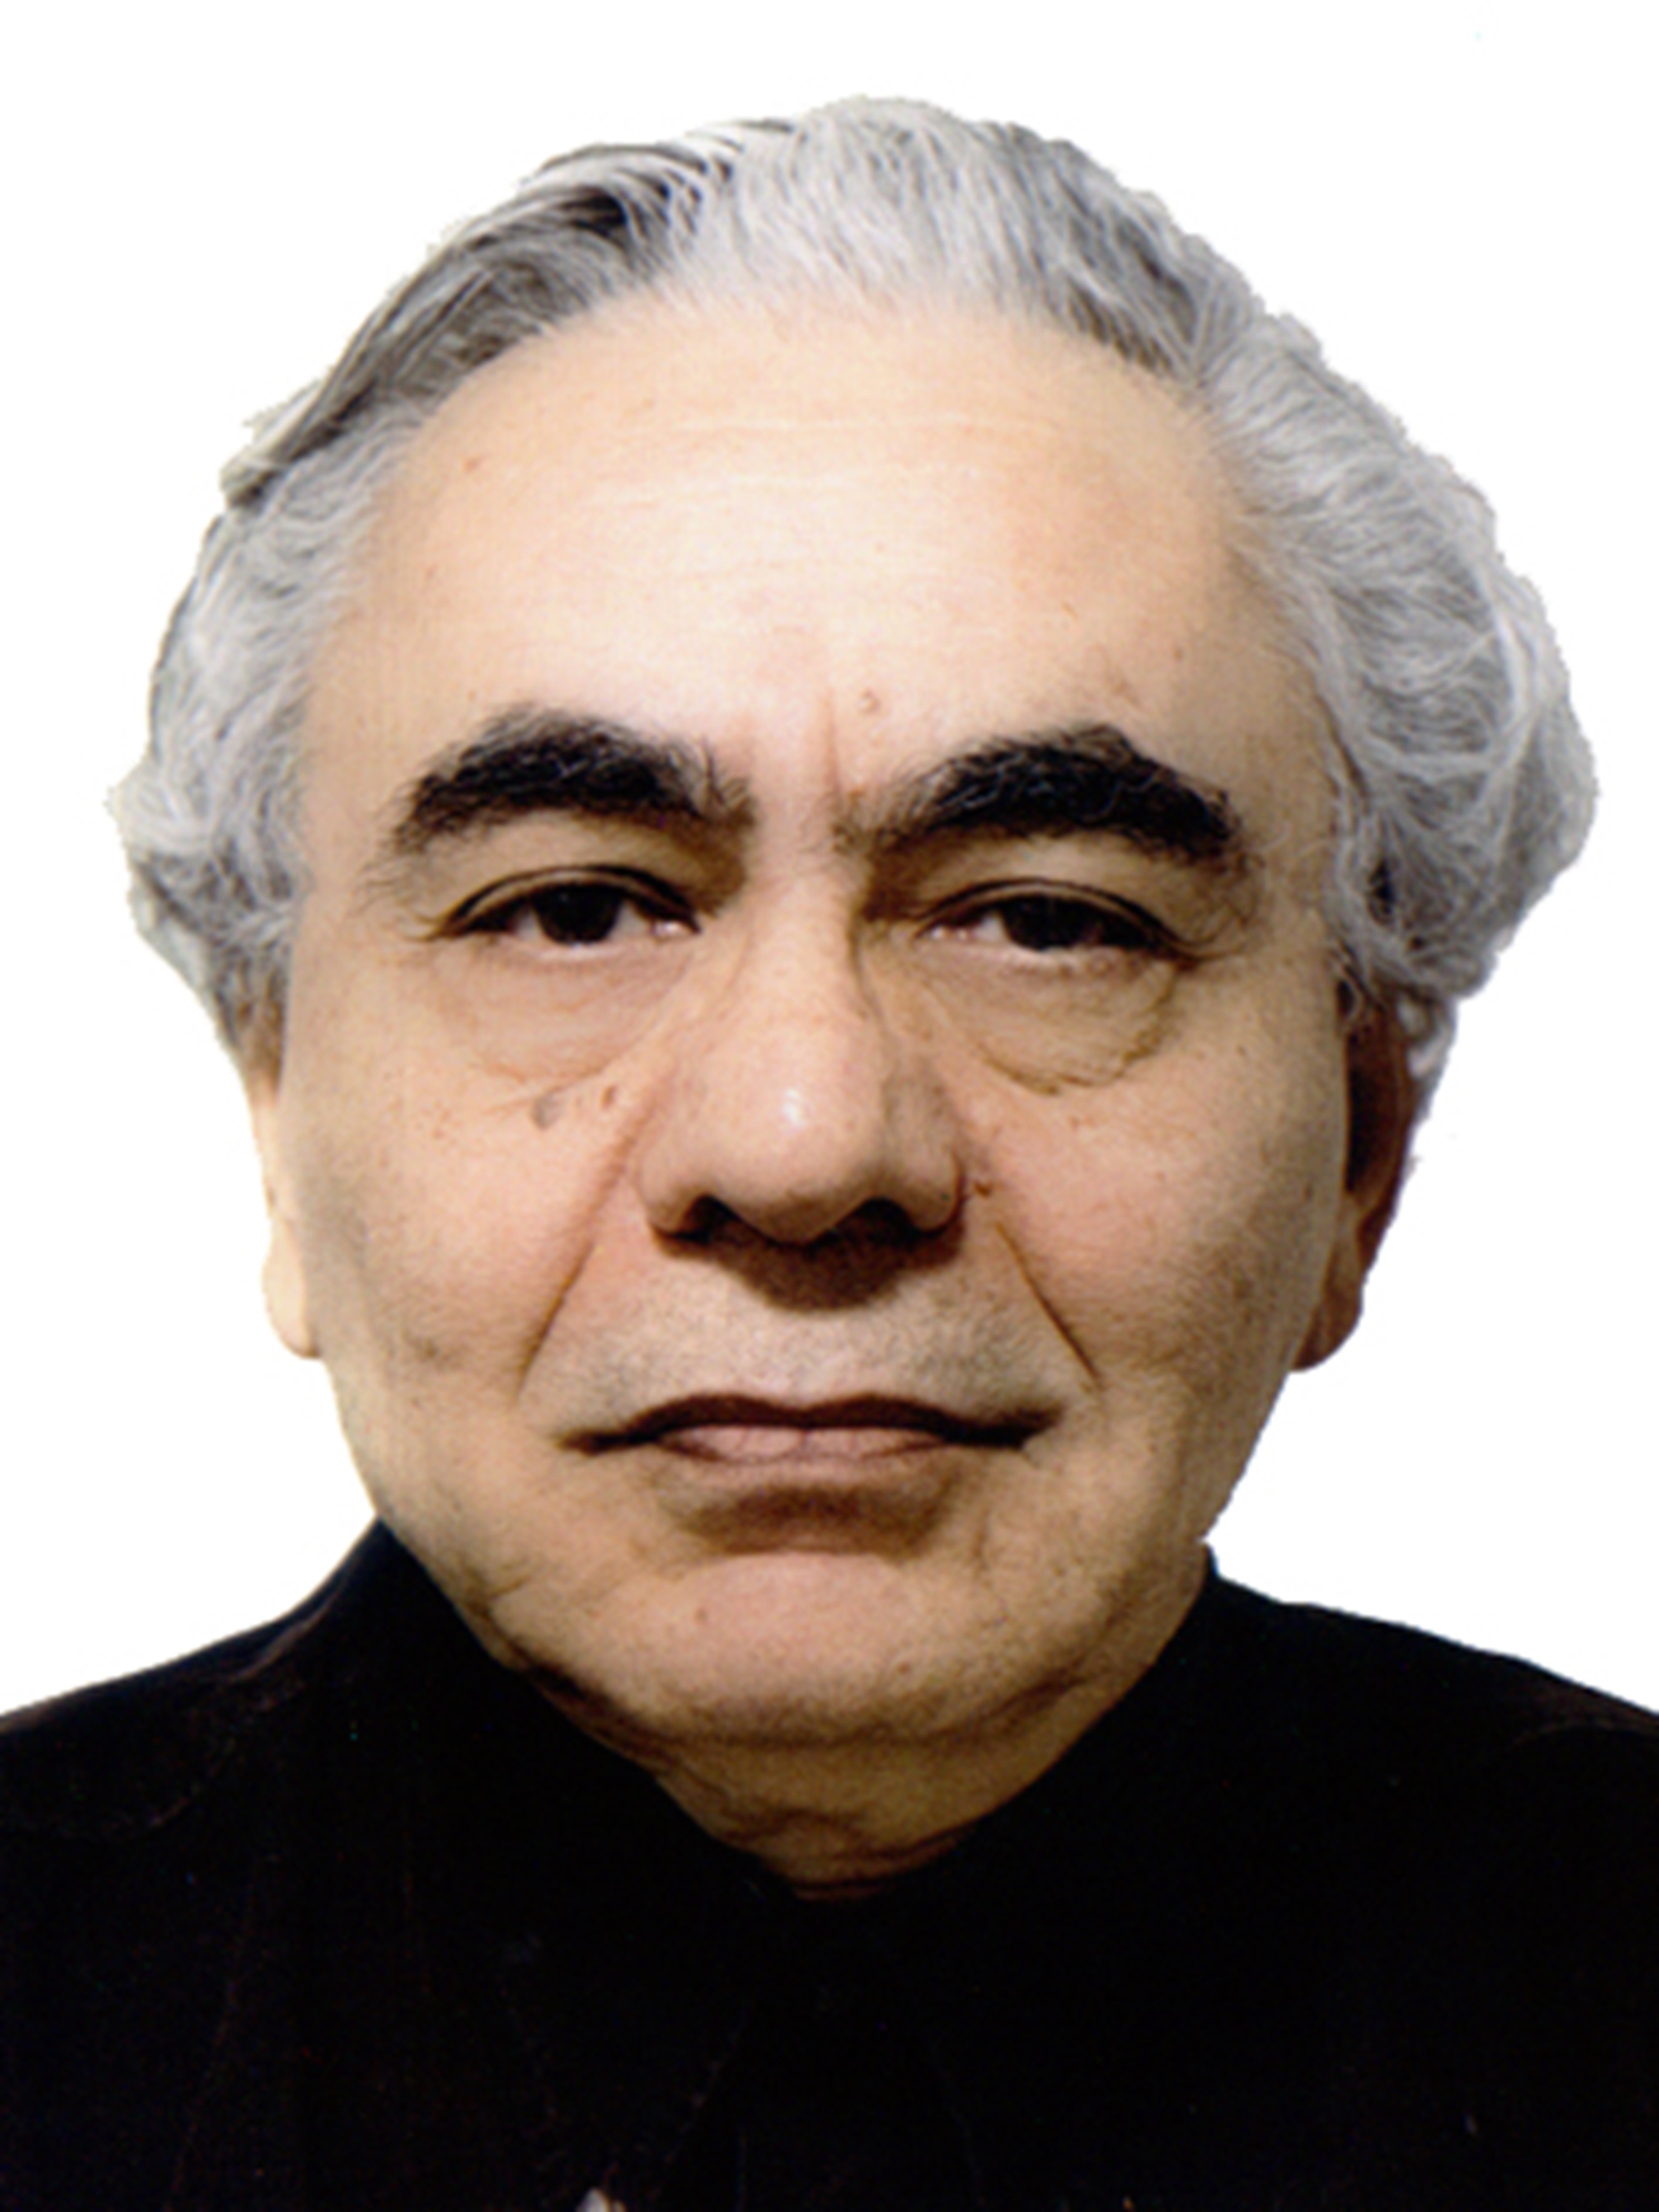 دکتر ملک منصور اقصی